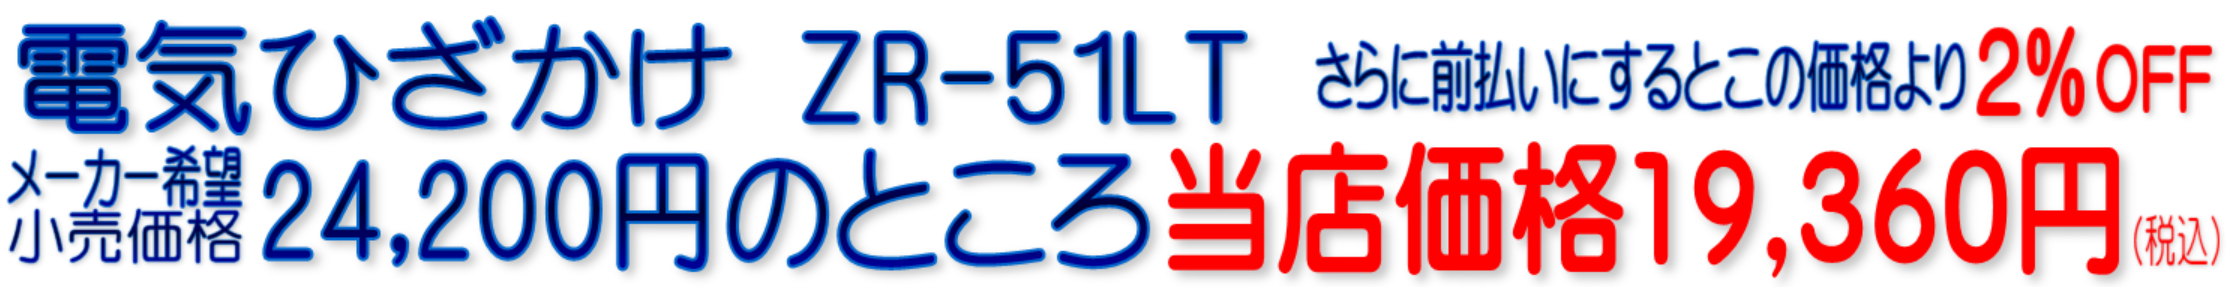 ZR-51LT 電気ひざかけ